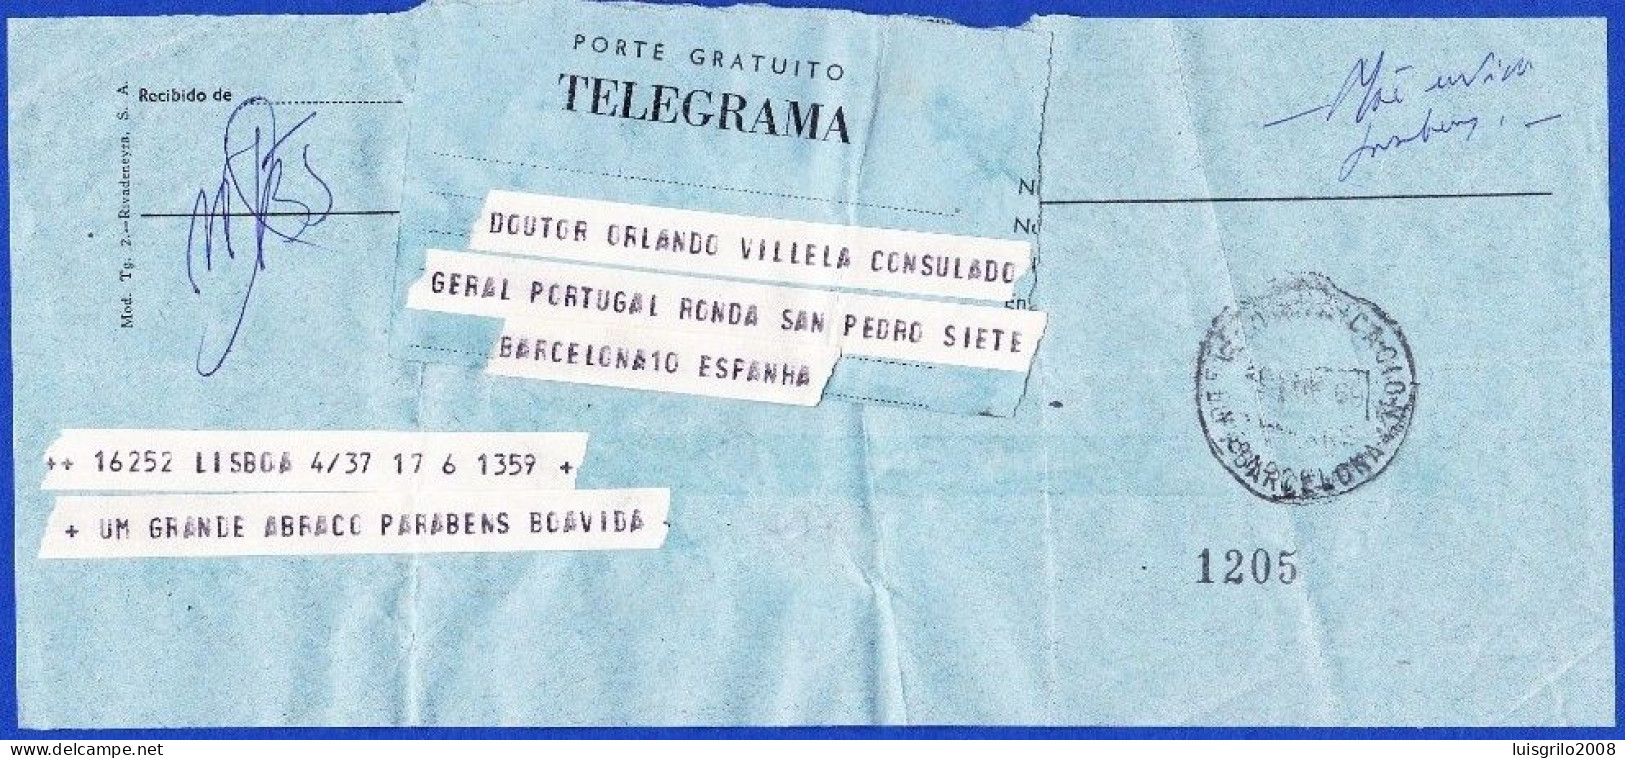 Telegrama Internacional - Lisboa > Consulado General De Portugal En Barcelona -|- Postmark - Barccelona. 1969 - Telegrafi